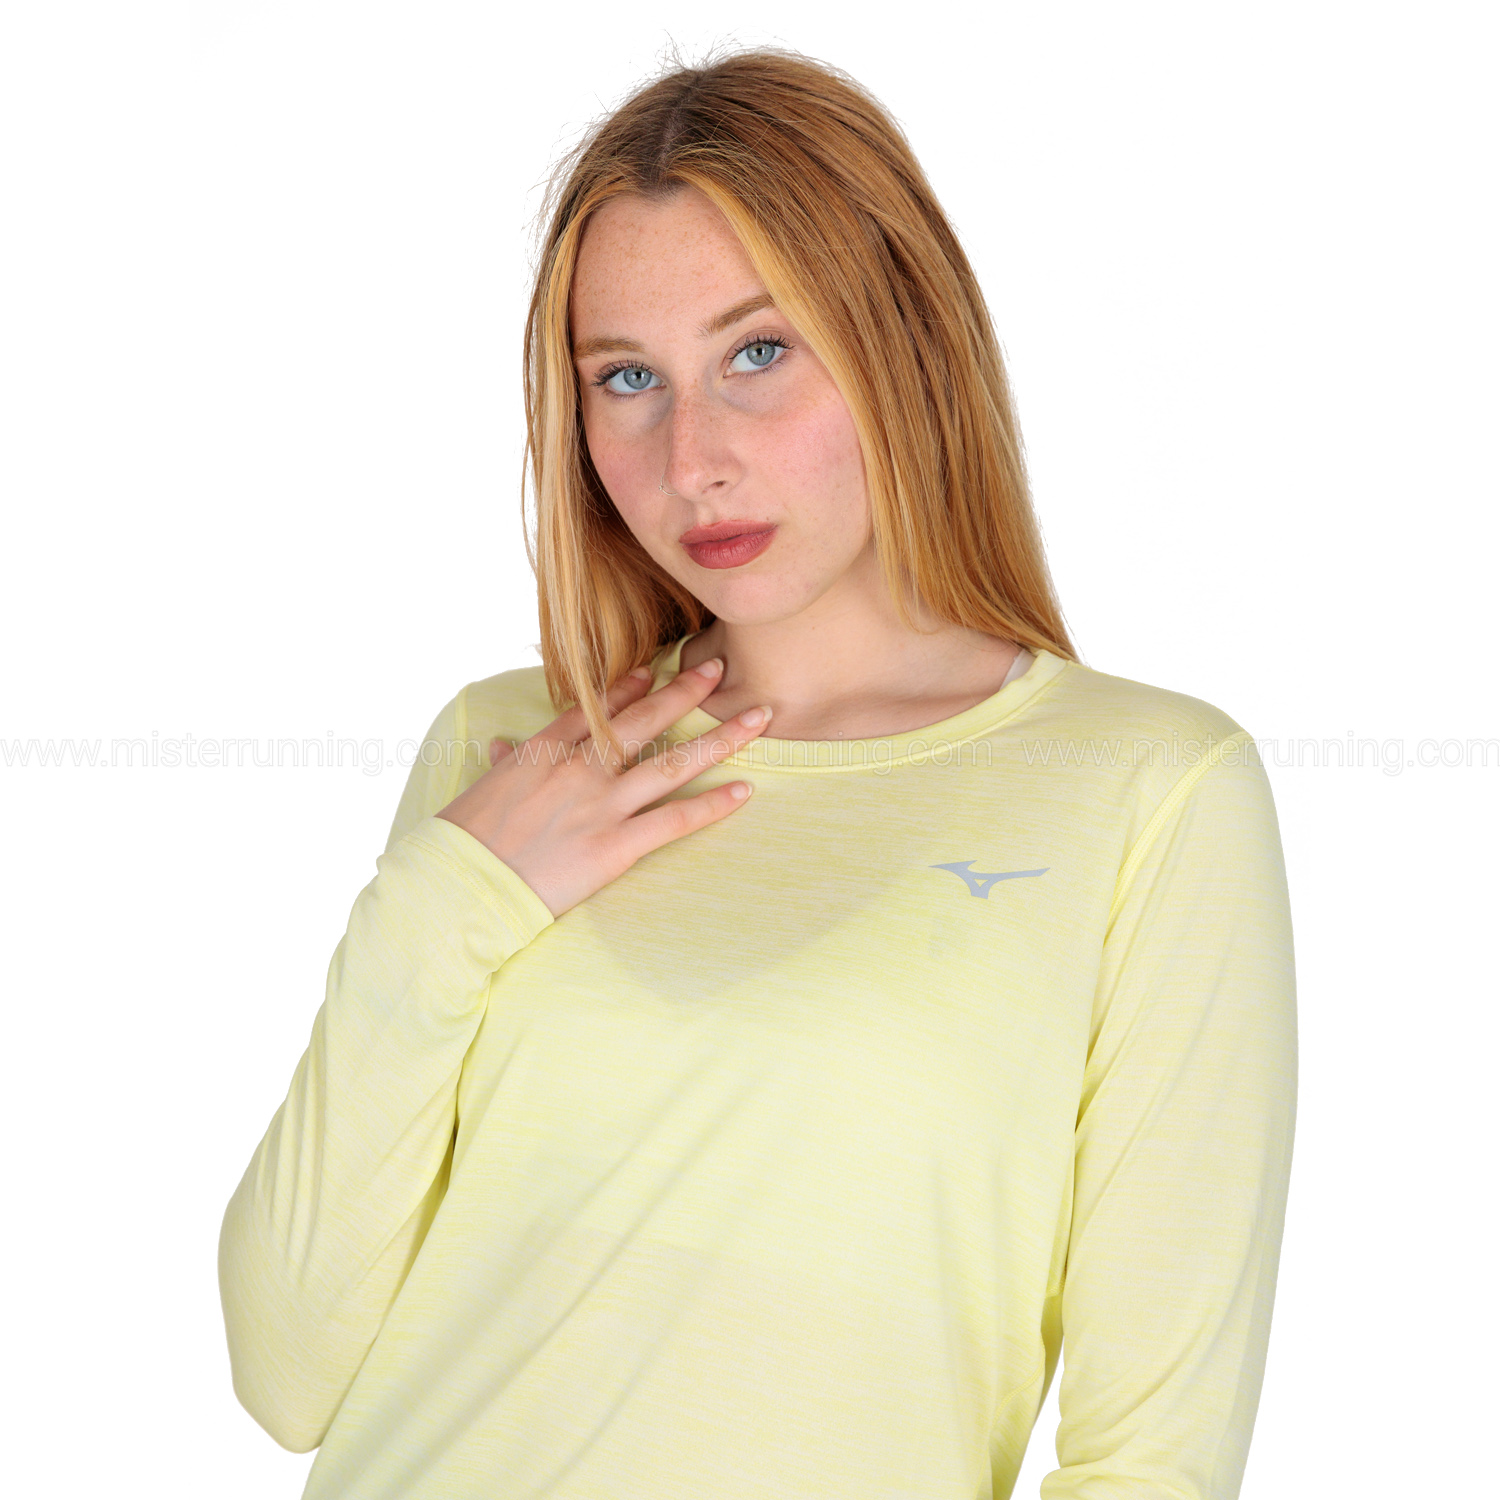 Mizuno Impulse Core Camisa - Pale Lime Yellow